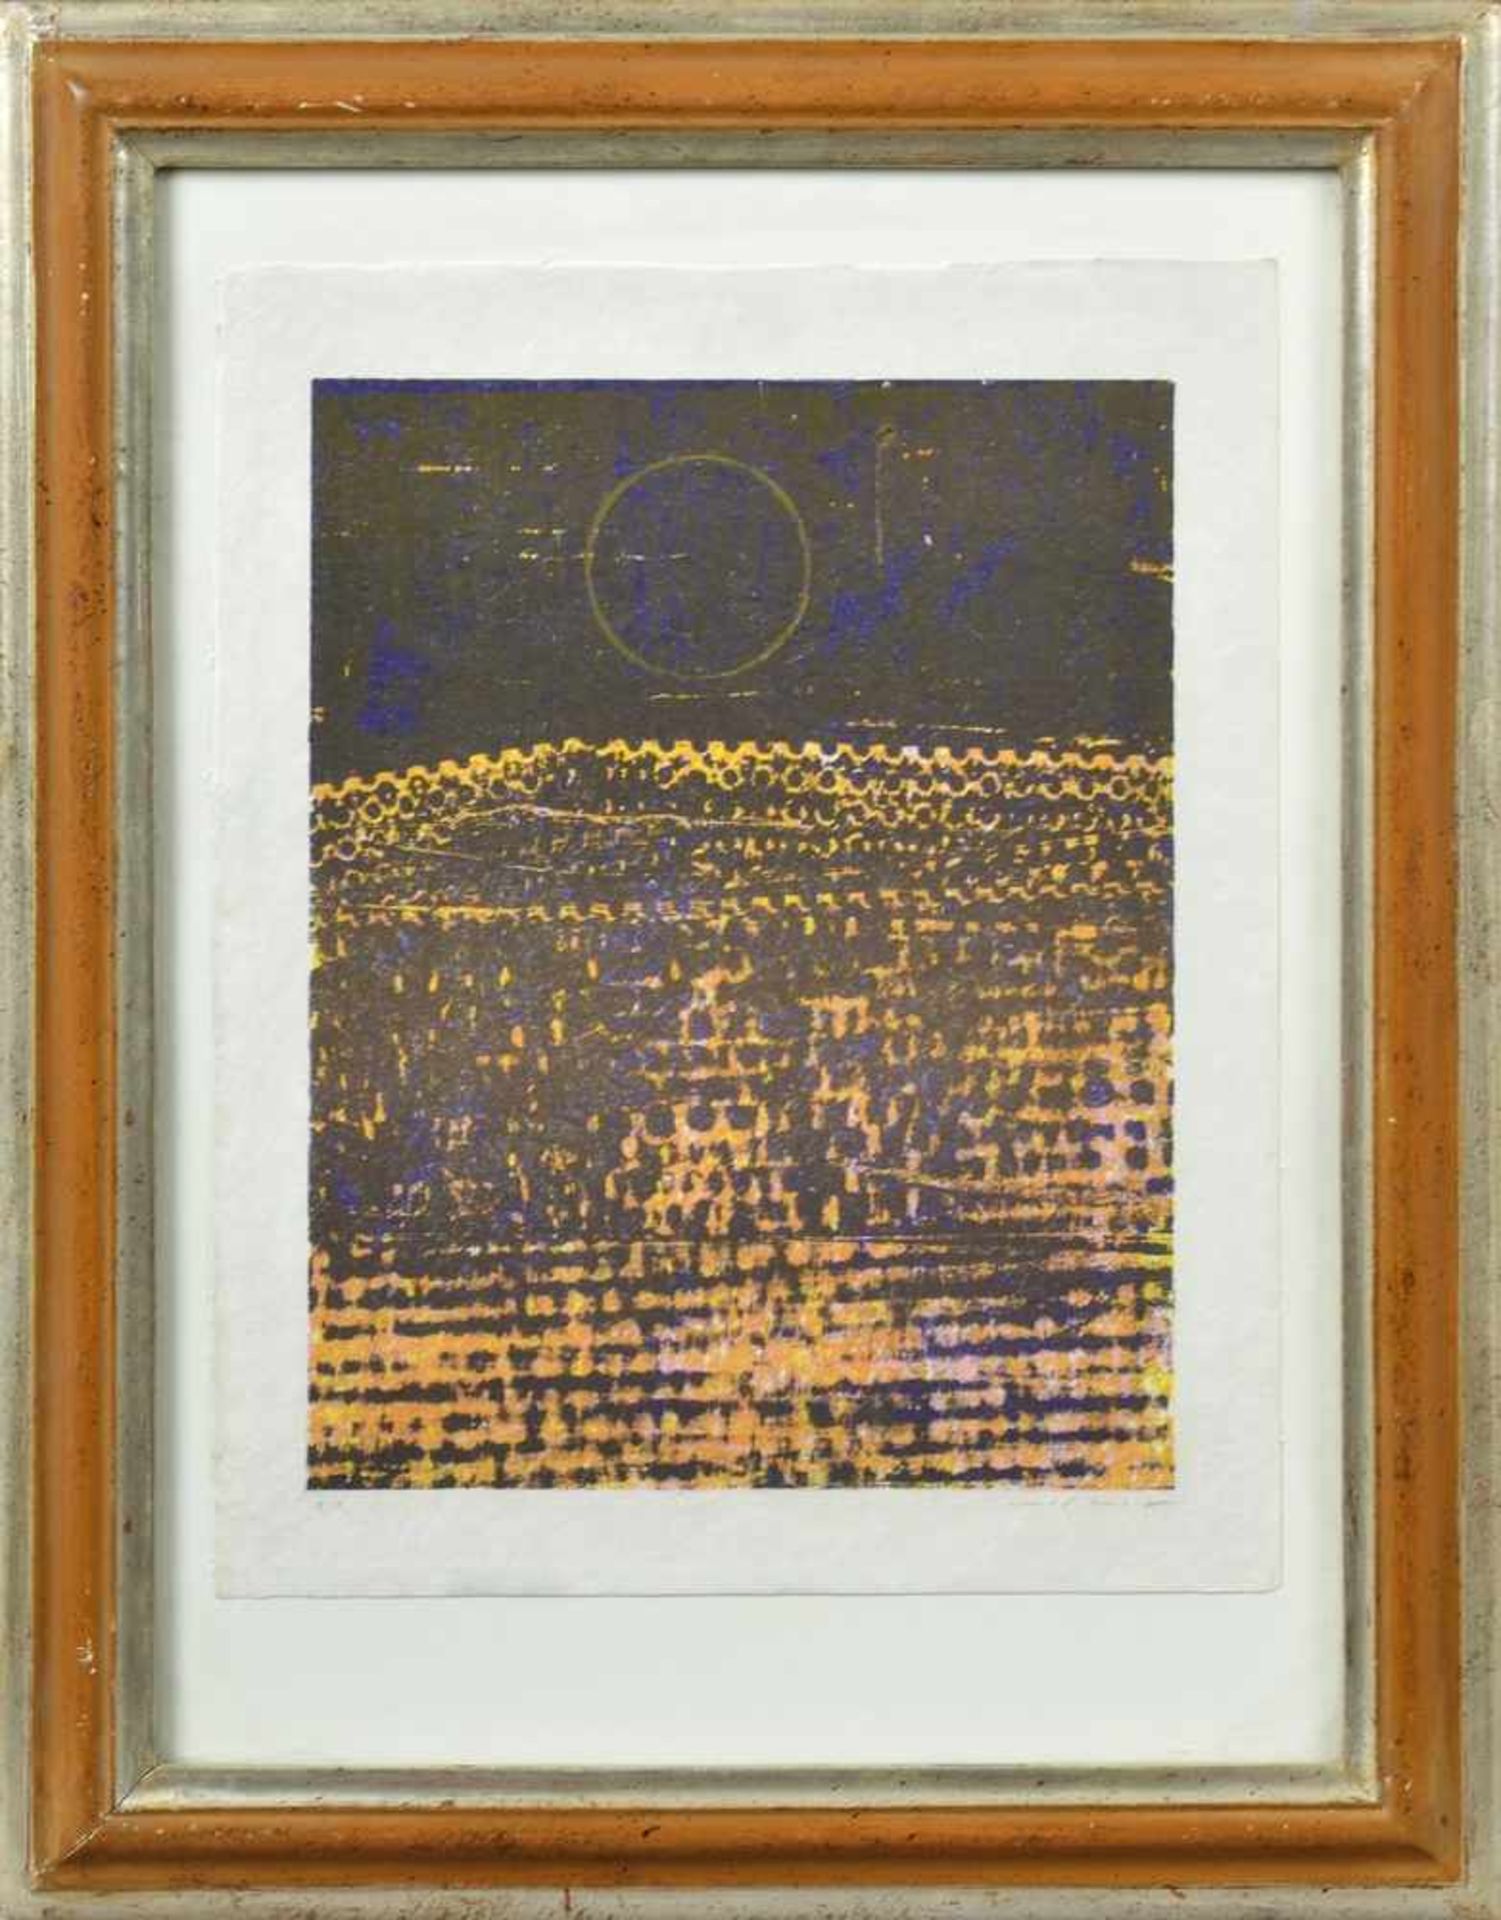 Ernst, Max (1891-1976) "Sonne" um 1970, Farboffsetlitho auf Japanpapier, e.a./u.r.sign., 36,5x29,5cm - Image 2 of 2